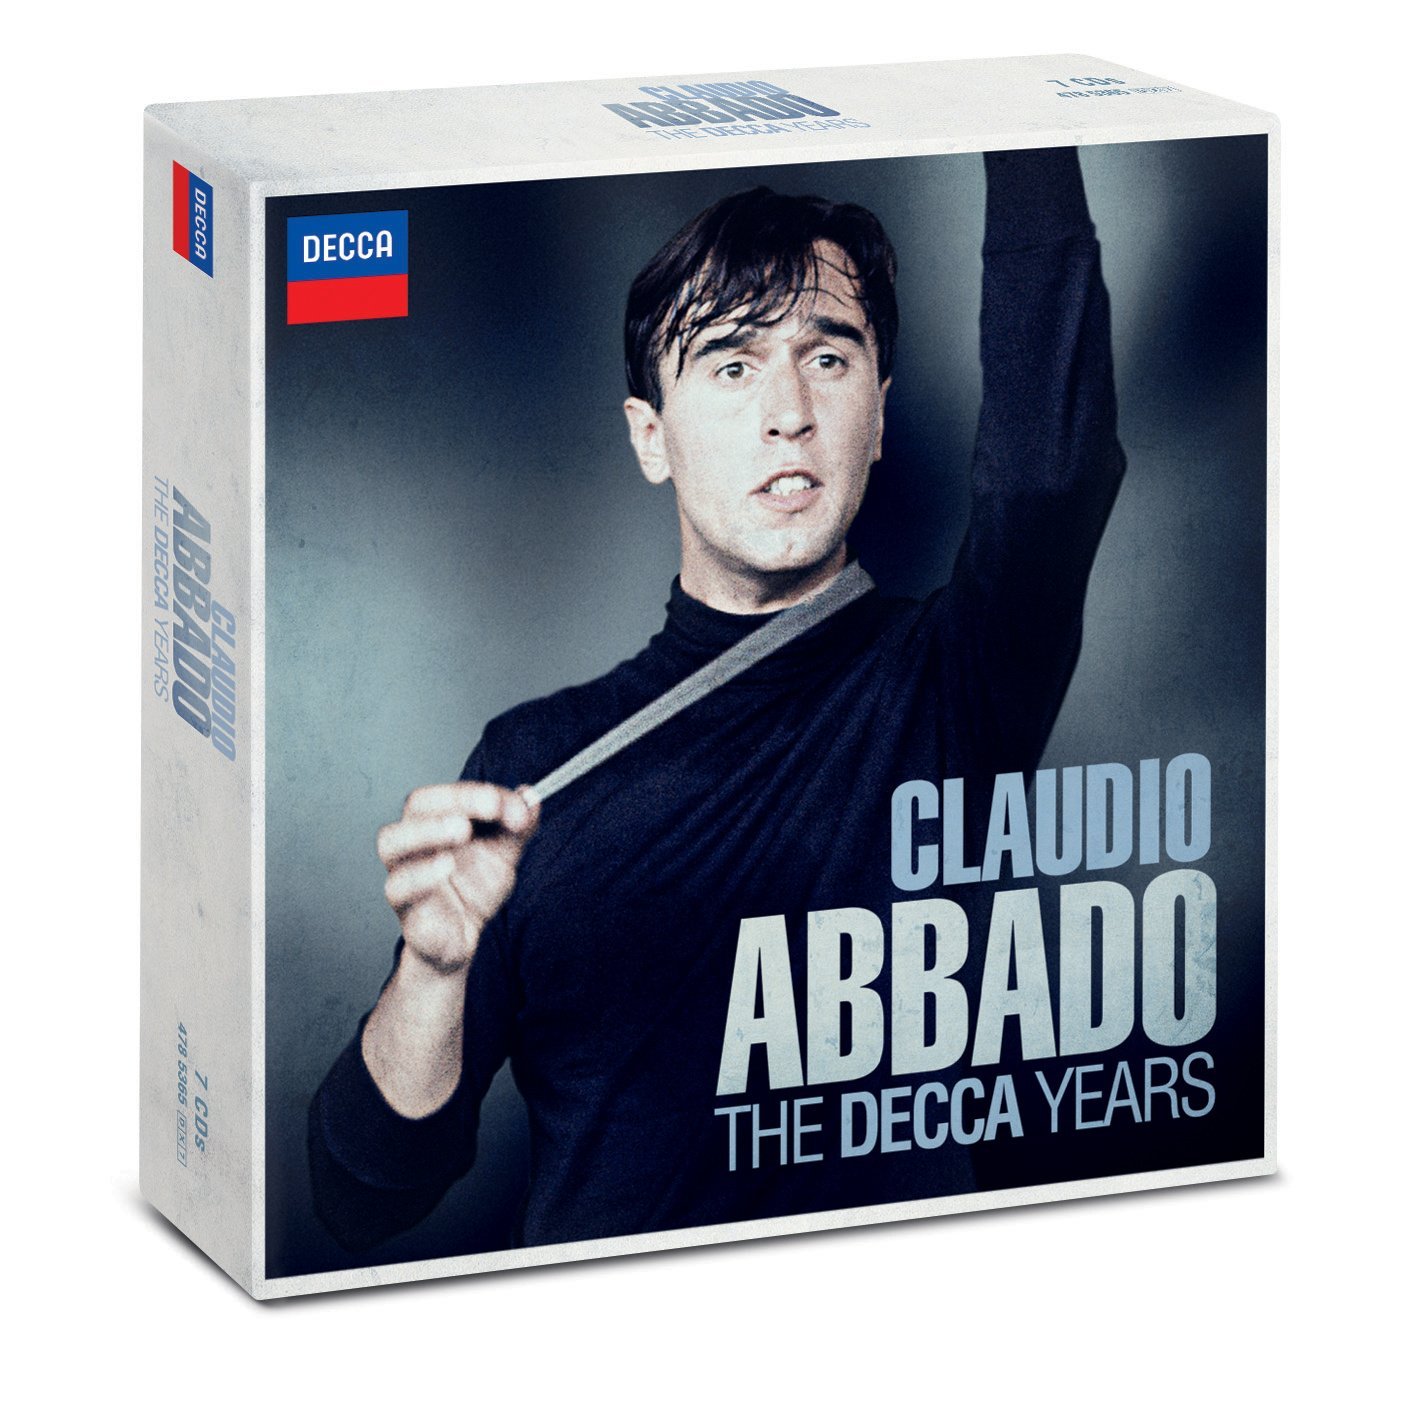 Claudio Abbado's  7 CD box-set of Decca Years